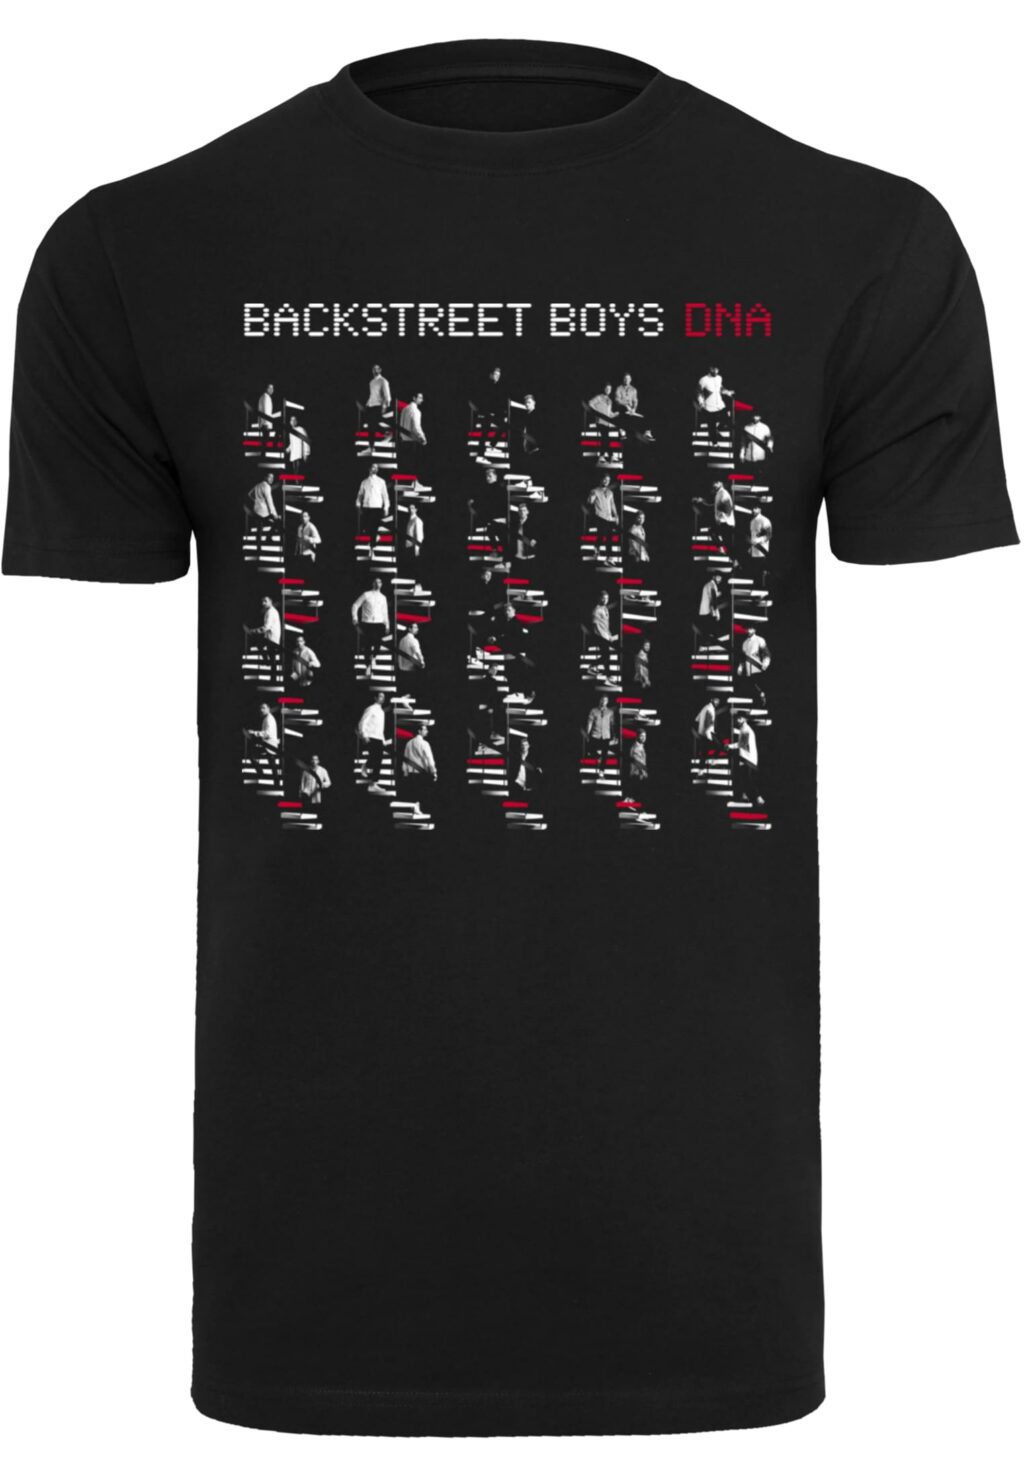 Backstreet Boys - DNA Album Red T-Shirt Round Neck black MP0004465